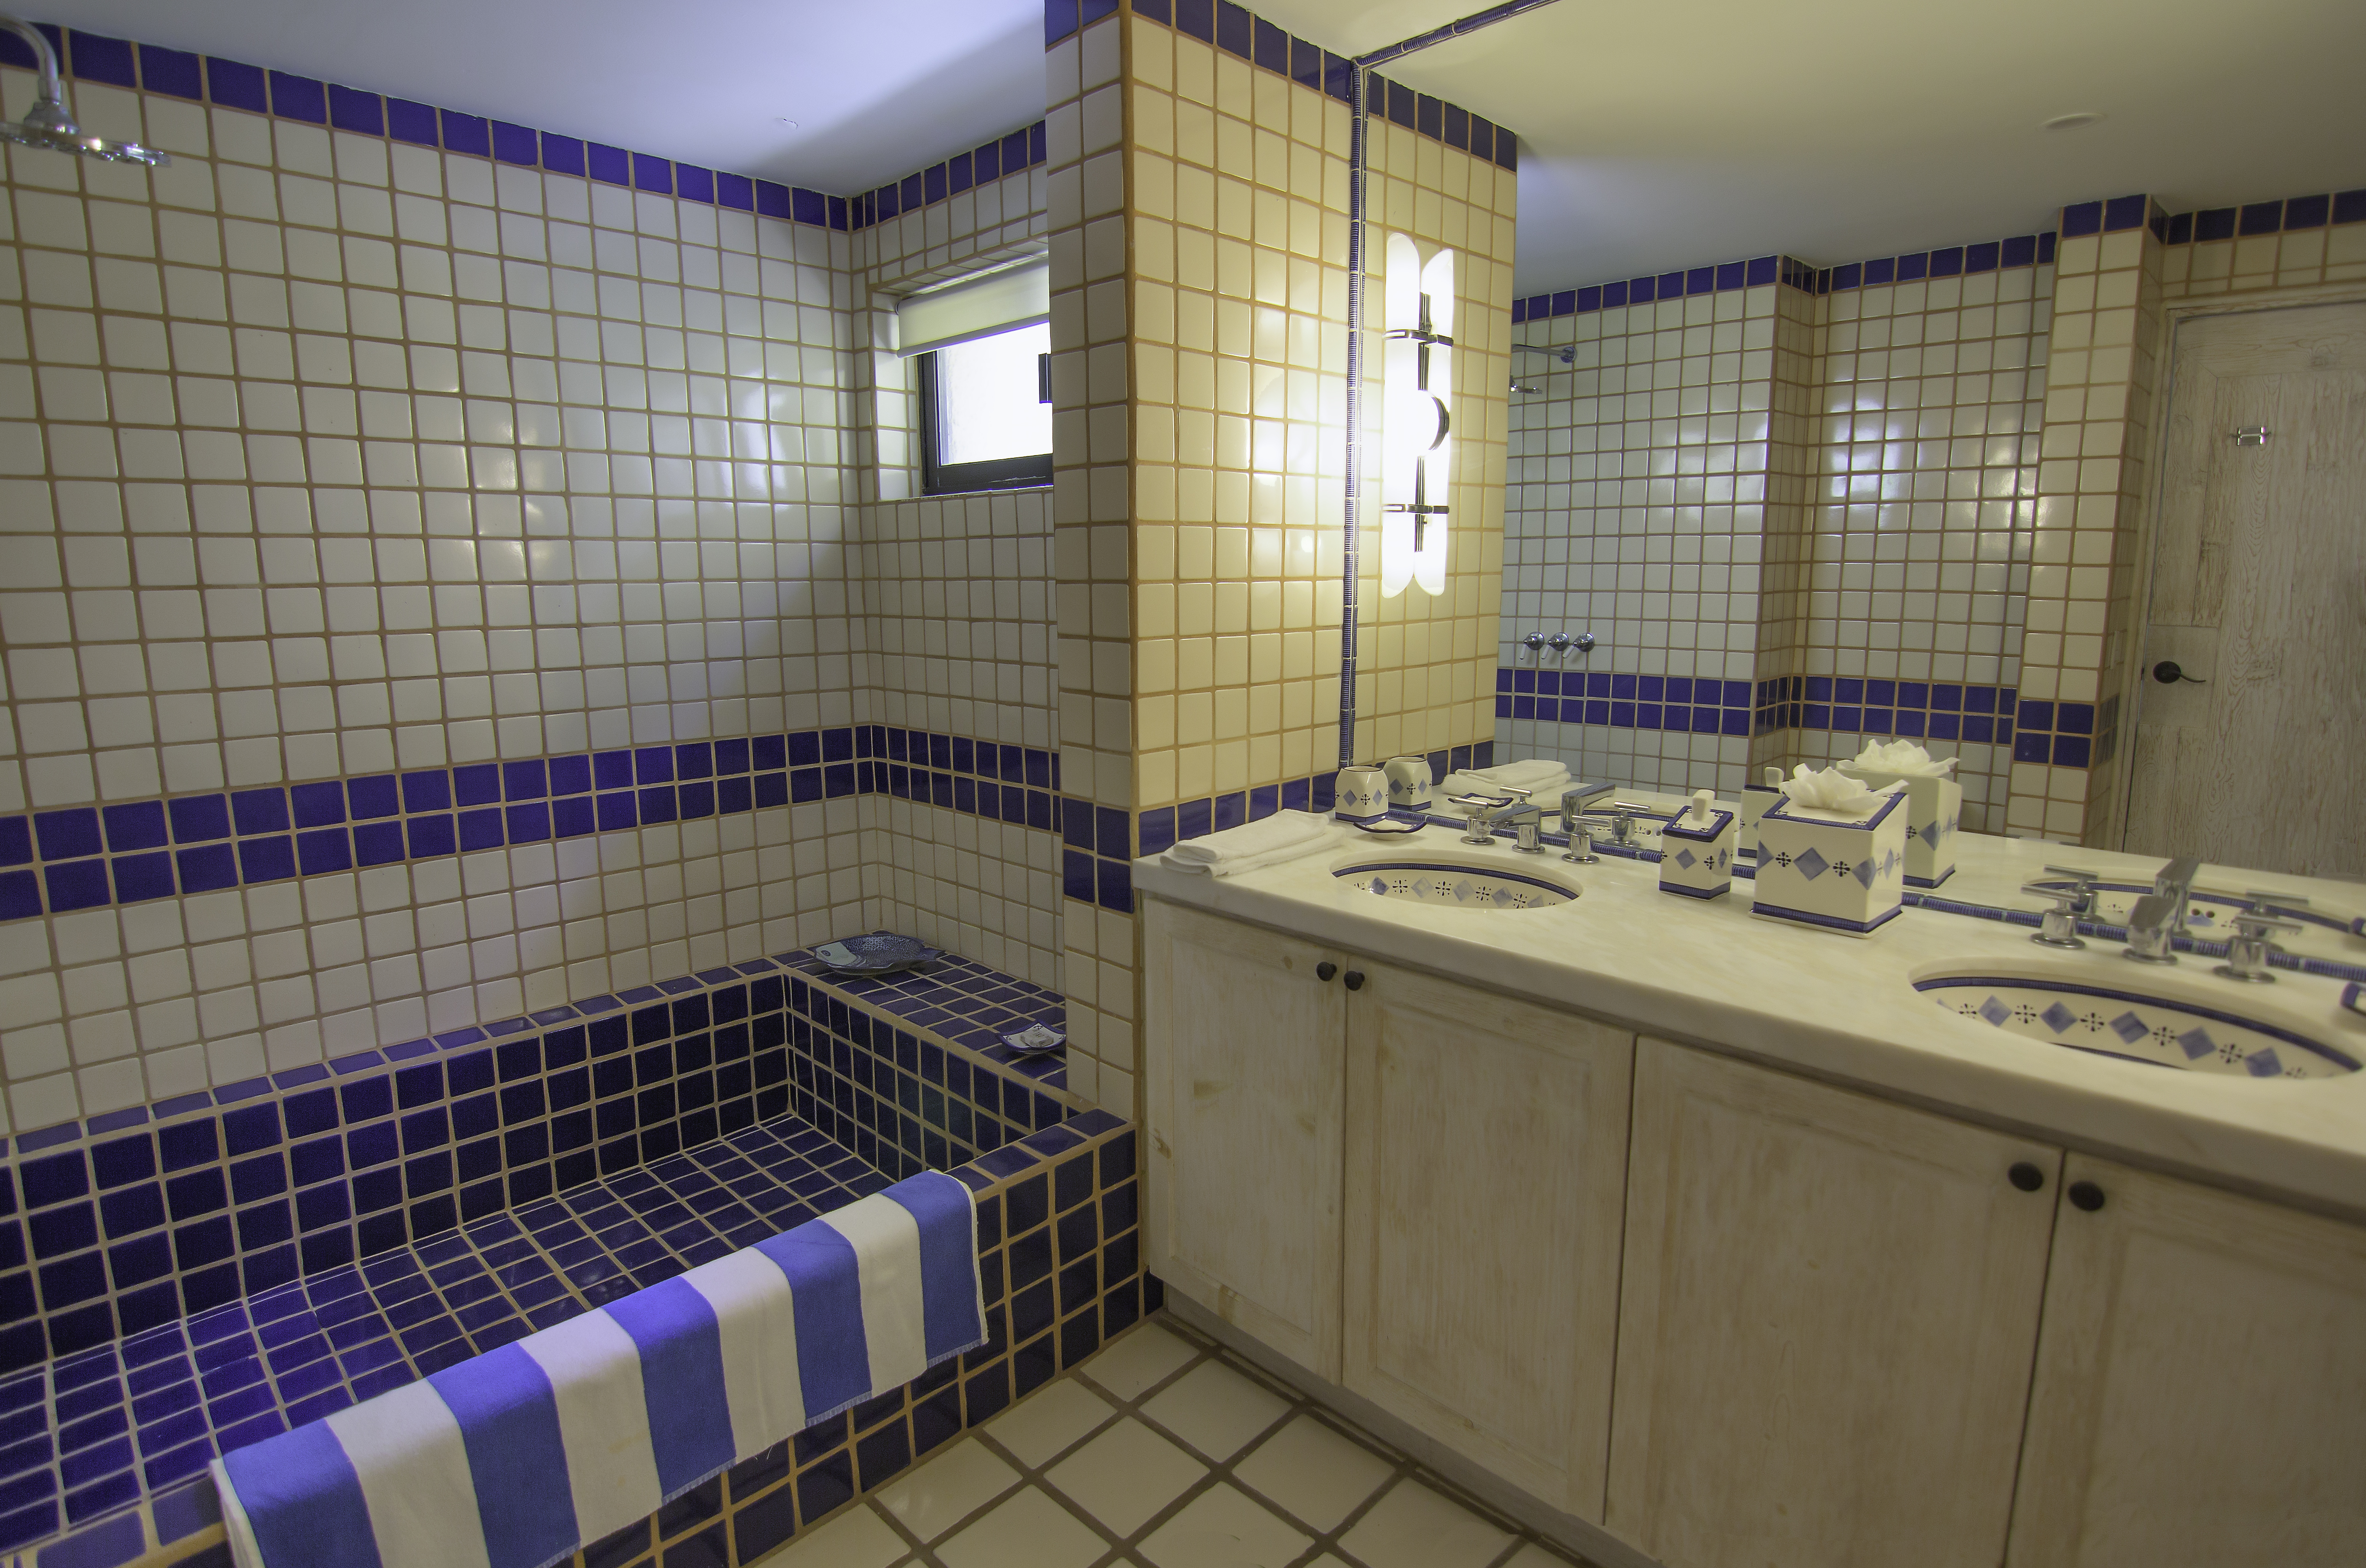 bathroom of terrasol beachfront resort condo for rent in cabo san lucas